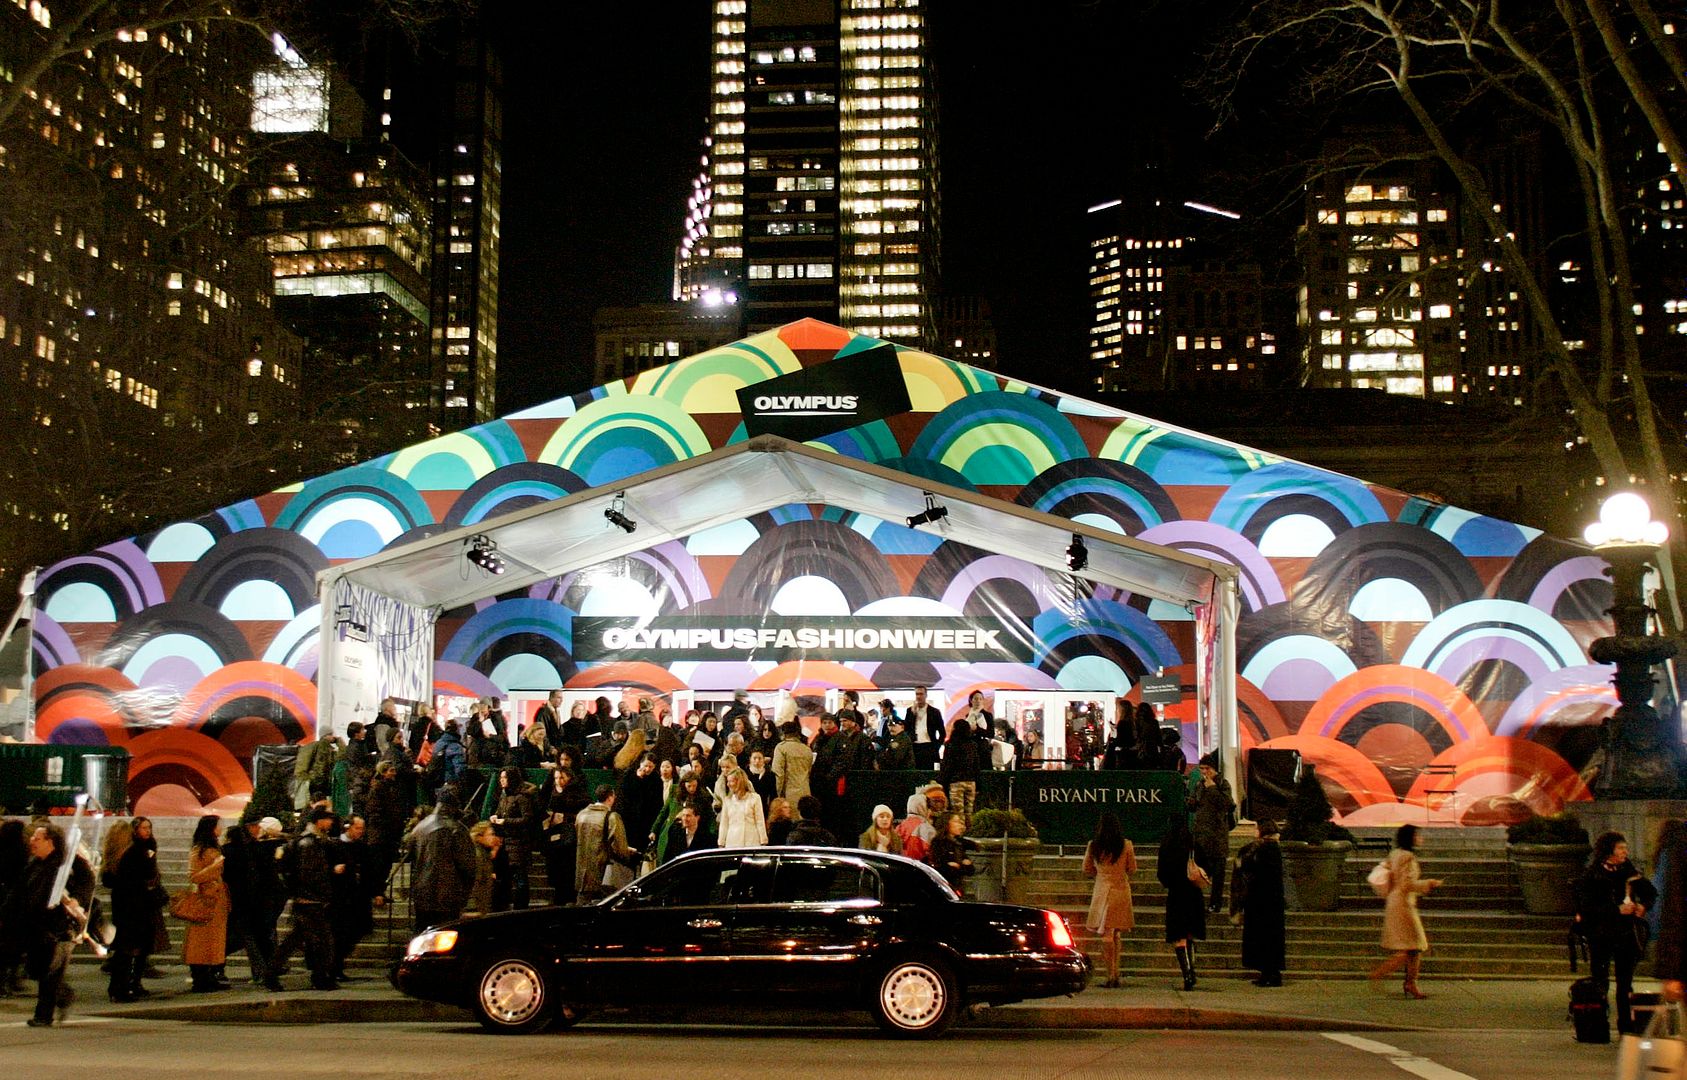 fashion-week-tents-in-new-york-city.jpg